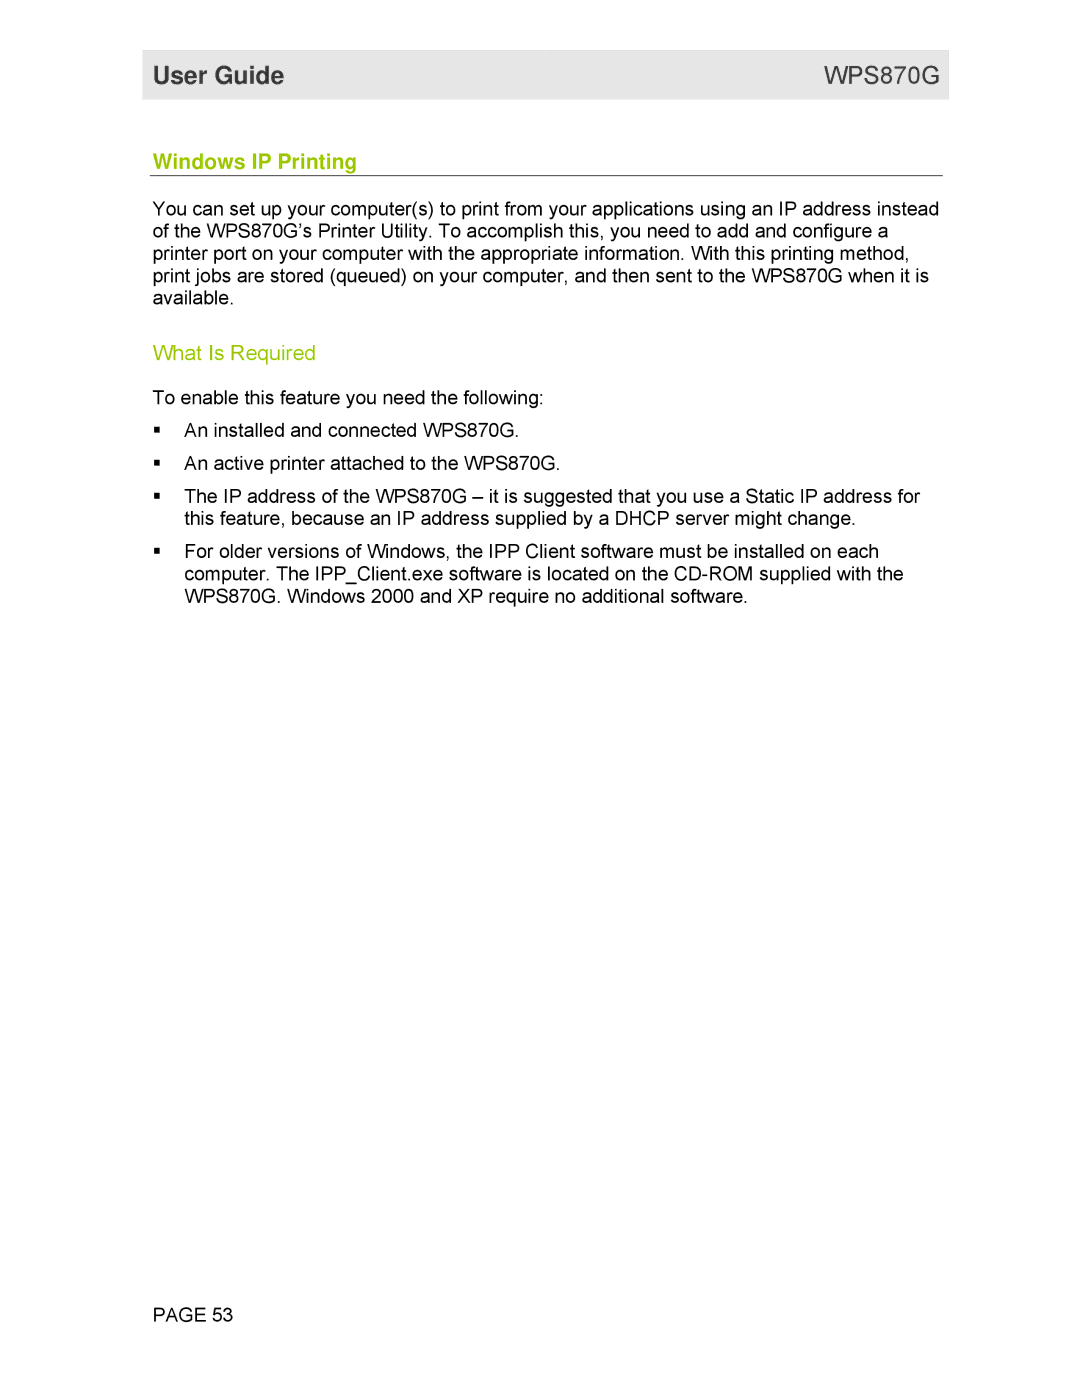 Motorola WPS870G manual Windows IP Printing, What Is Required 